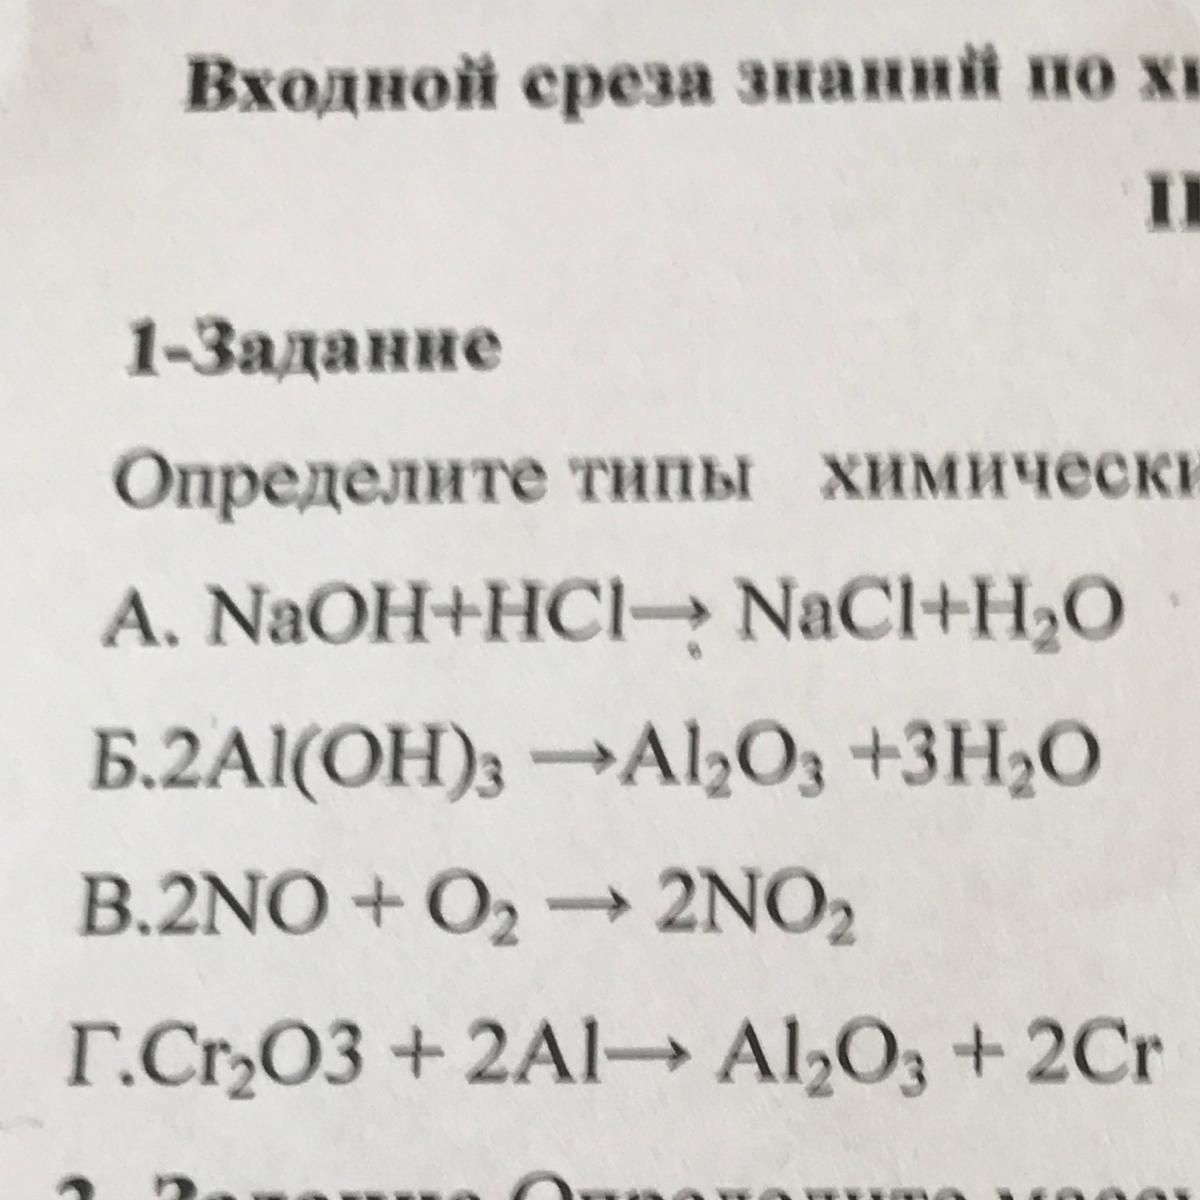 Hci na20. Уравнение хим реакции NAOH+HCI=Naci+h2o. А1(он)3 → а1203 + н20. Раствить коэффициент NAOH + HCI = Naci +h2o. Определите Тип химической реакции , уравнение которой : HCI+NAOH-Naci+h2o.